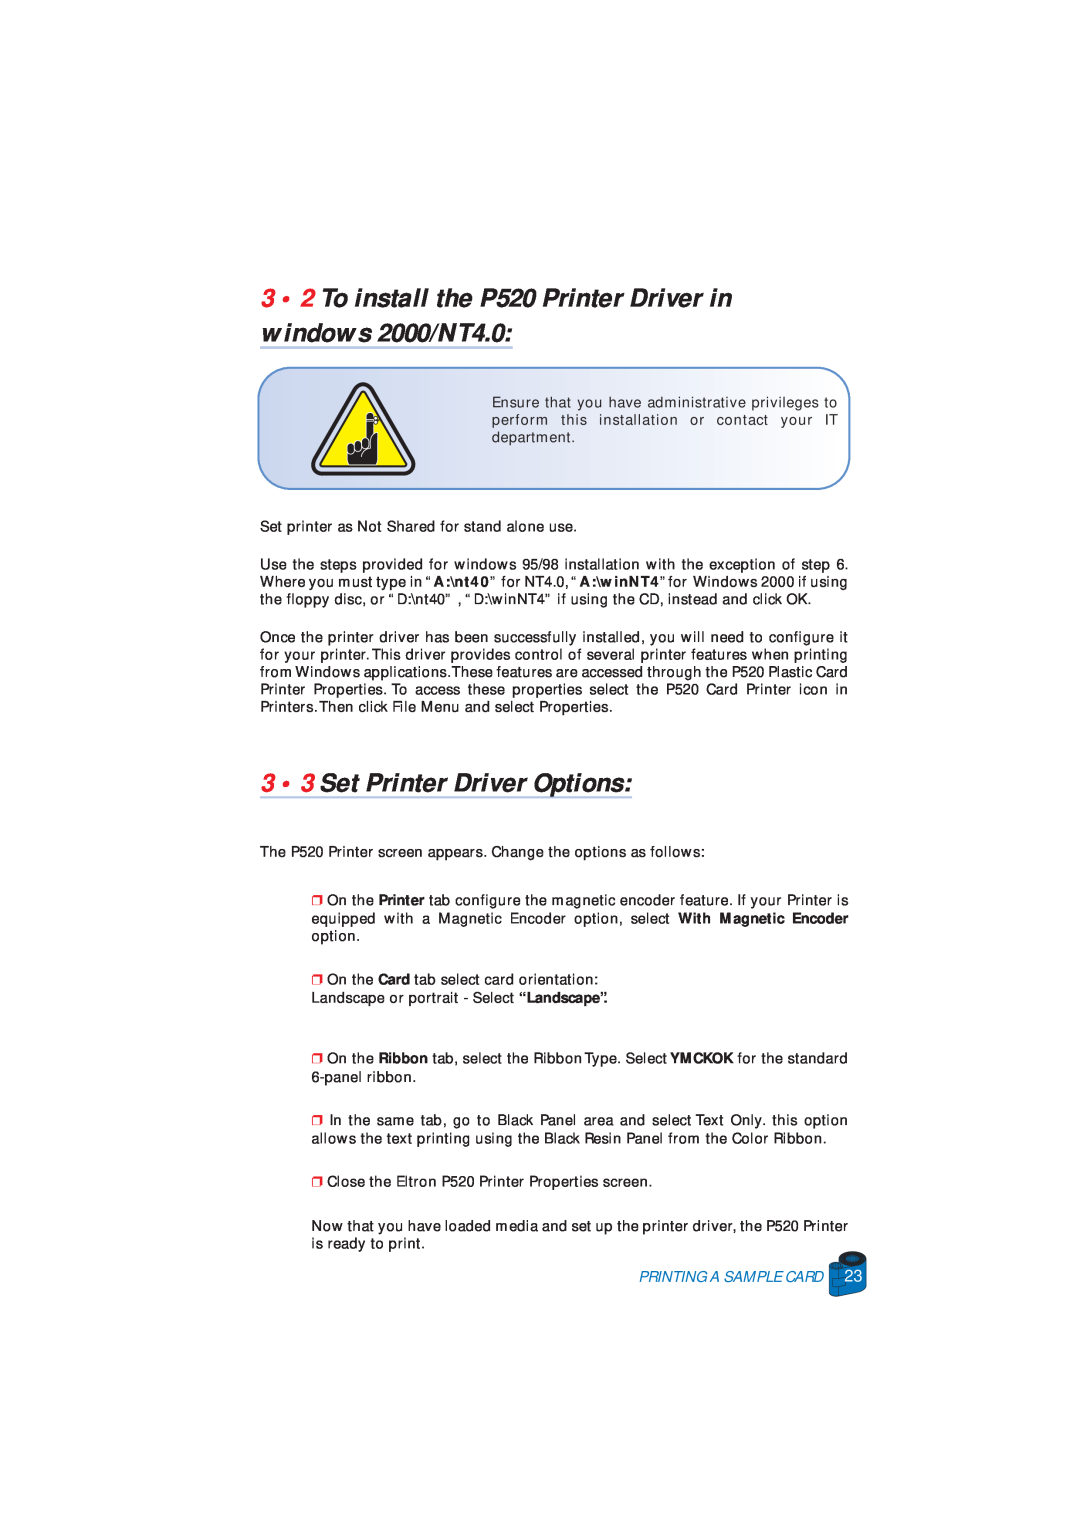 Zebra Technologies 3 2 To install the P520 Printer Driver in windows 2000/NT4.0, 3 3 Set Printer Driver Options 